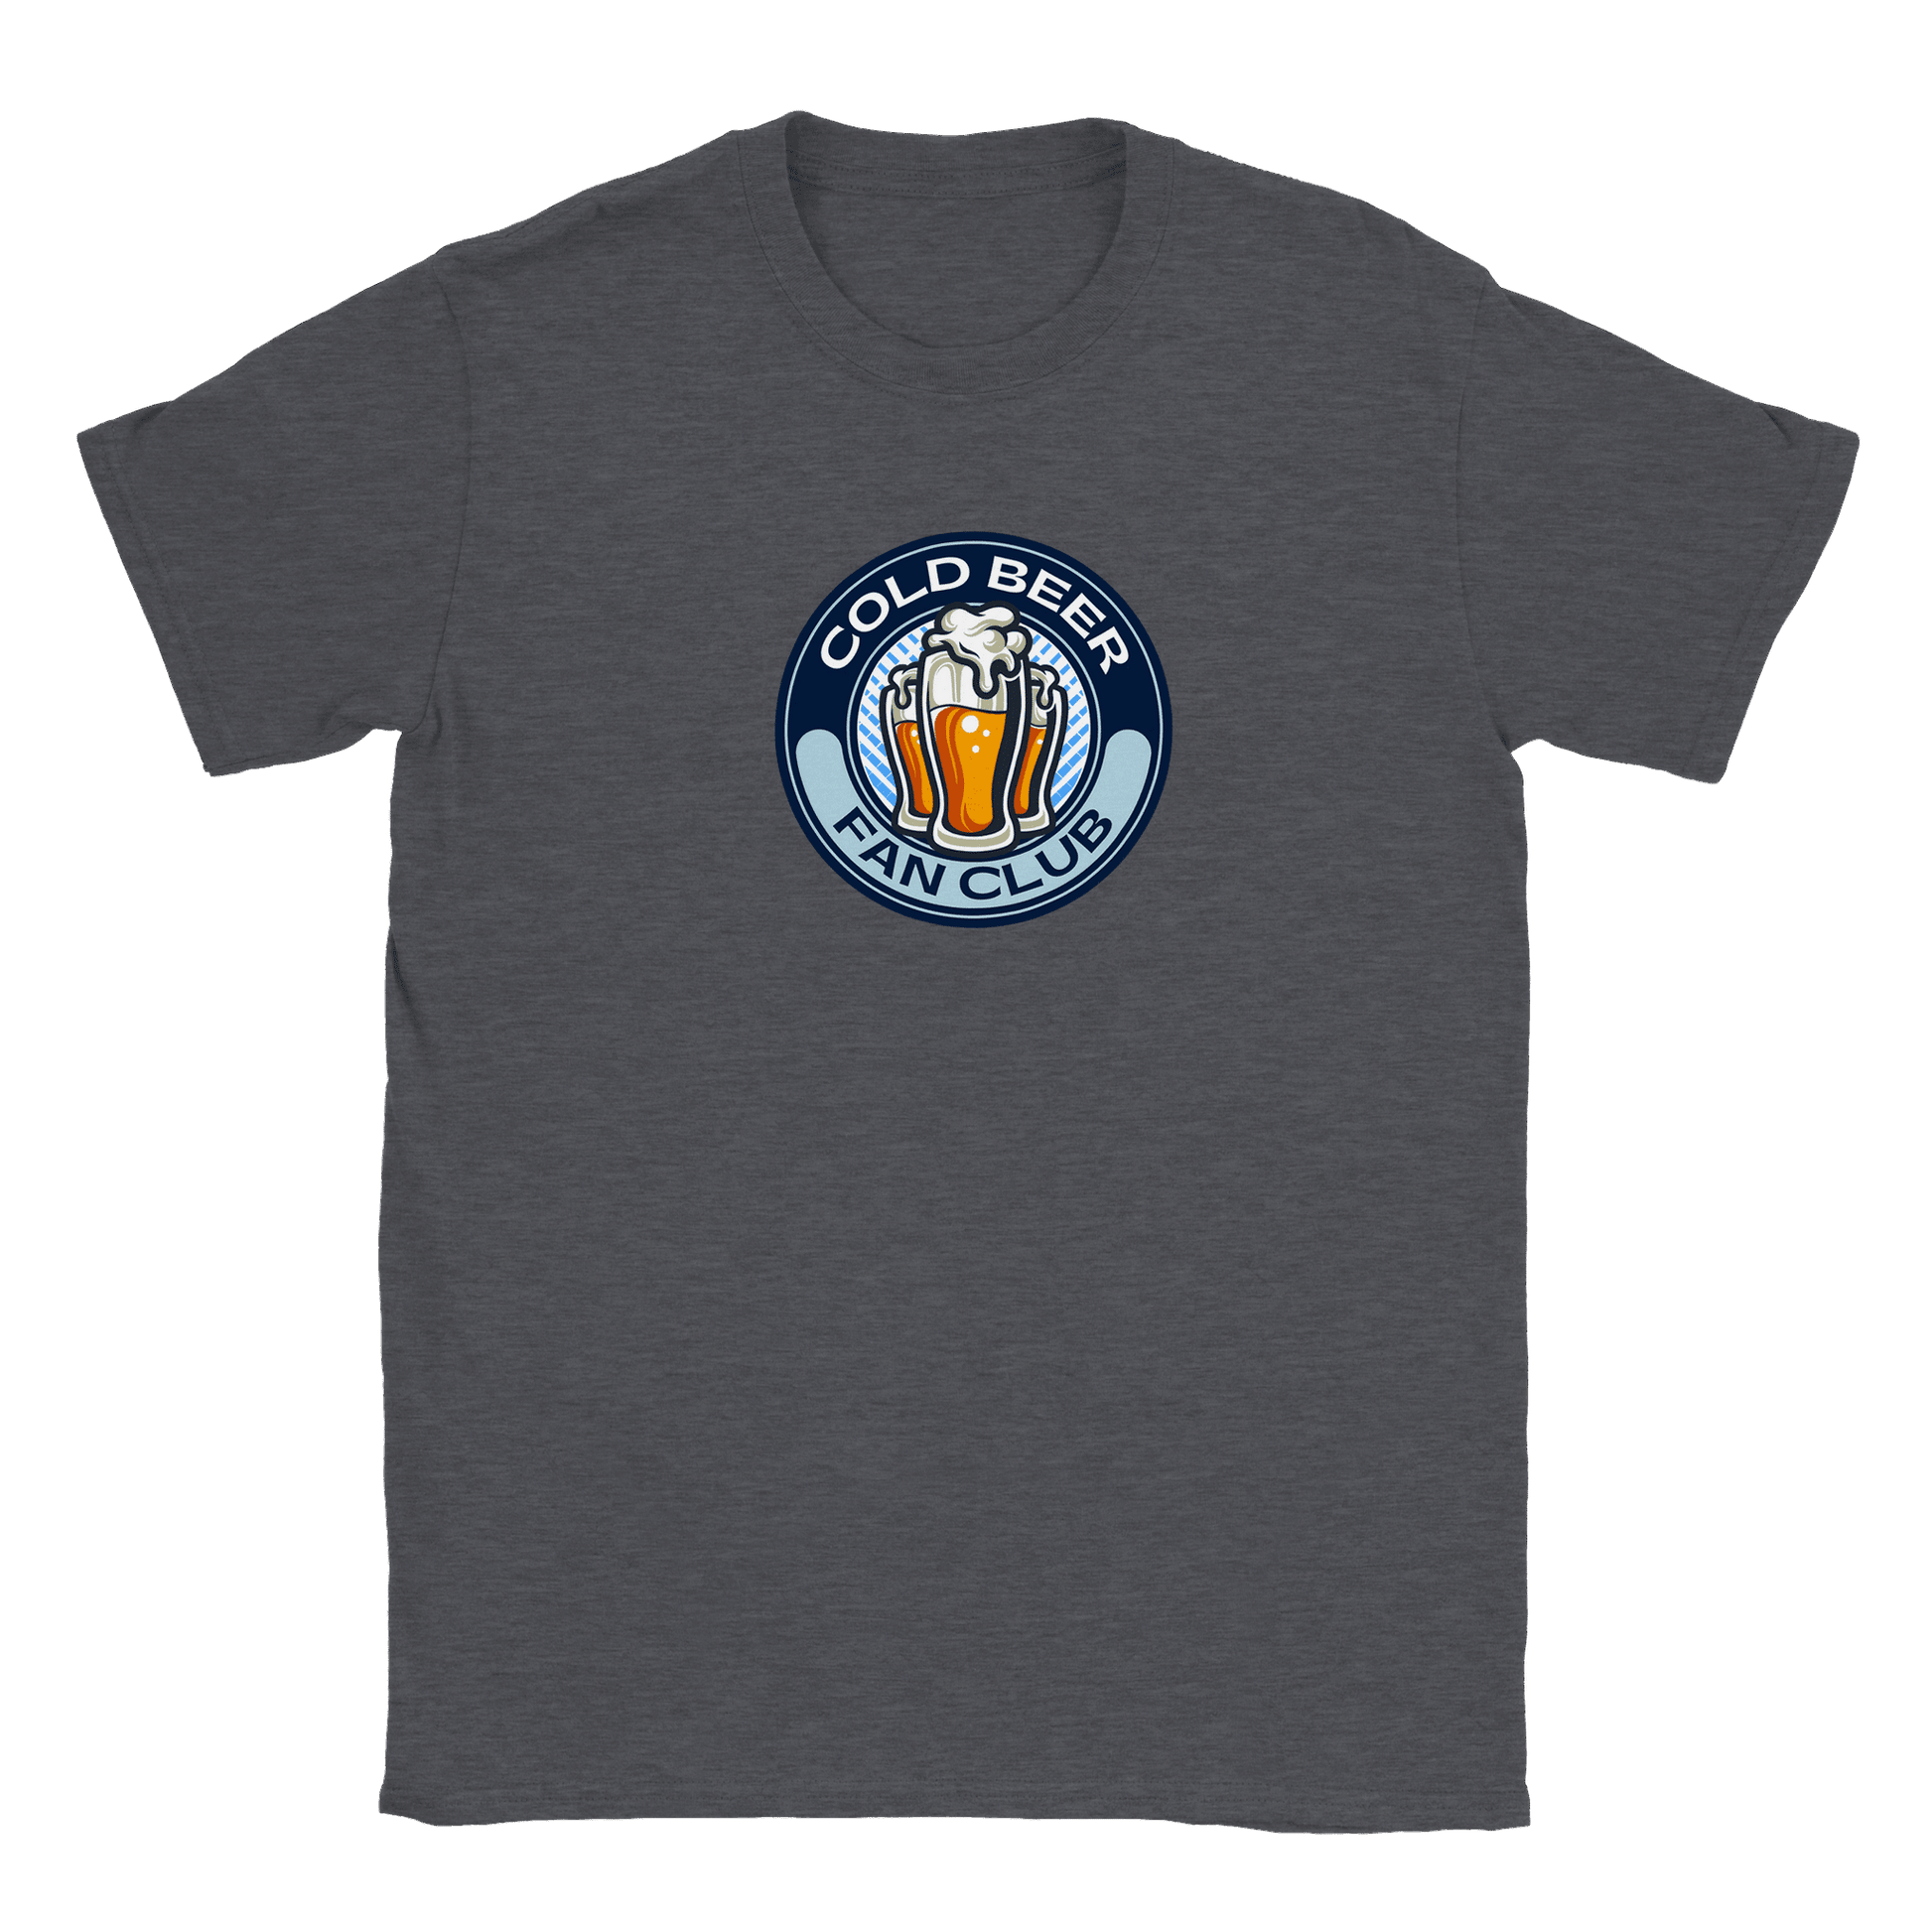 Cold Beer Fan Club - T-shirt Mörk Ljung